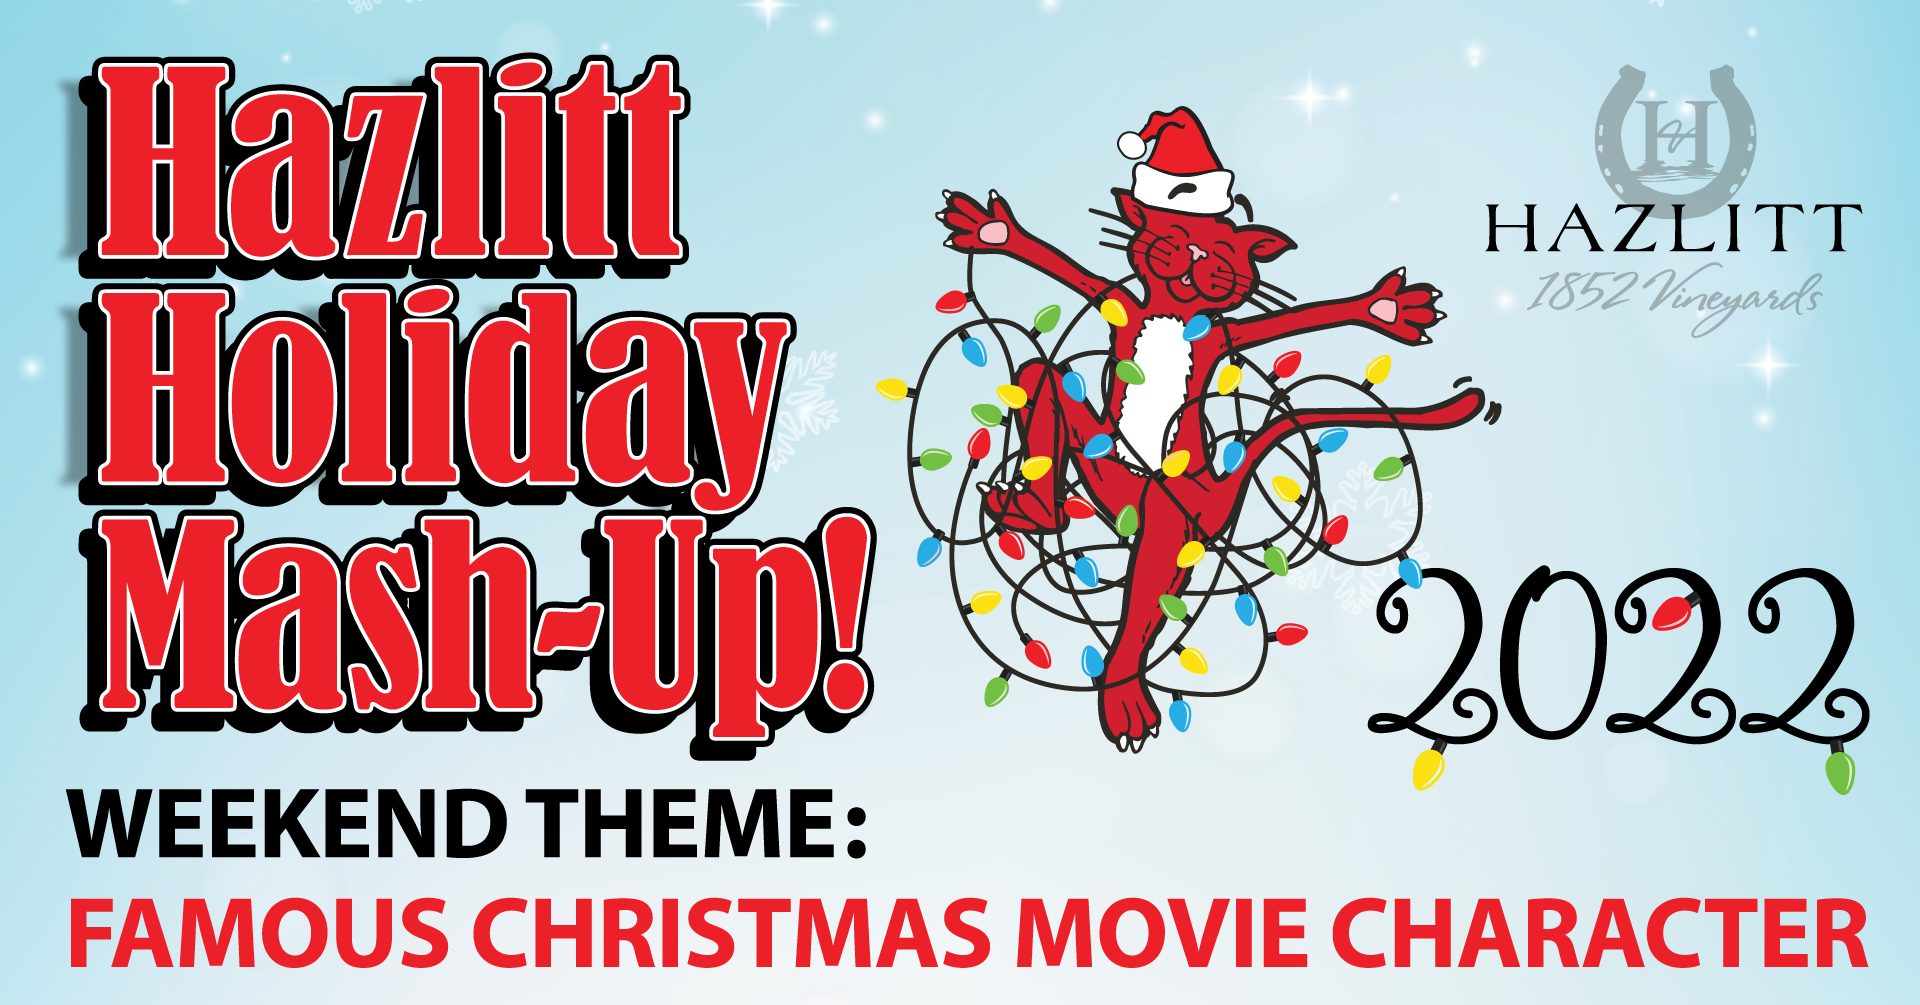 Hazlitt Holiday Mash-Up! Weekend Theme: Famous Christmas Movie Character